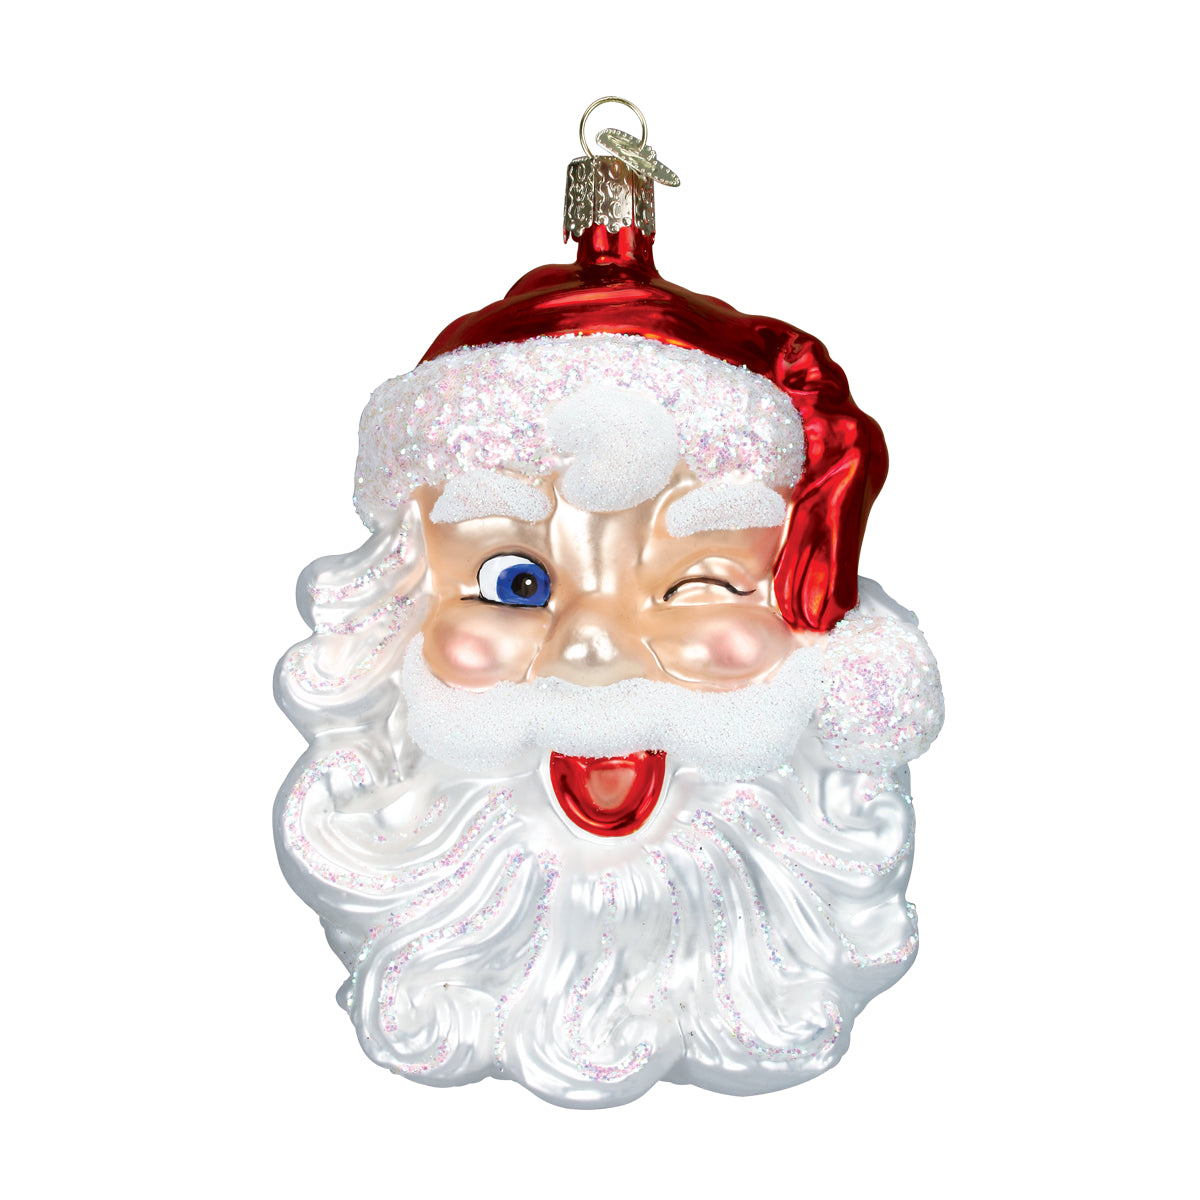 Winking Santa Ornament